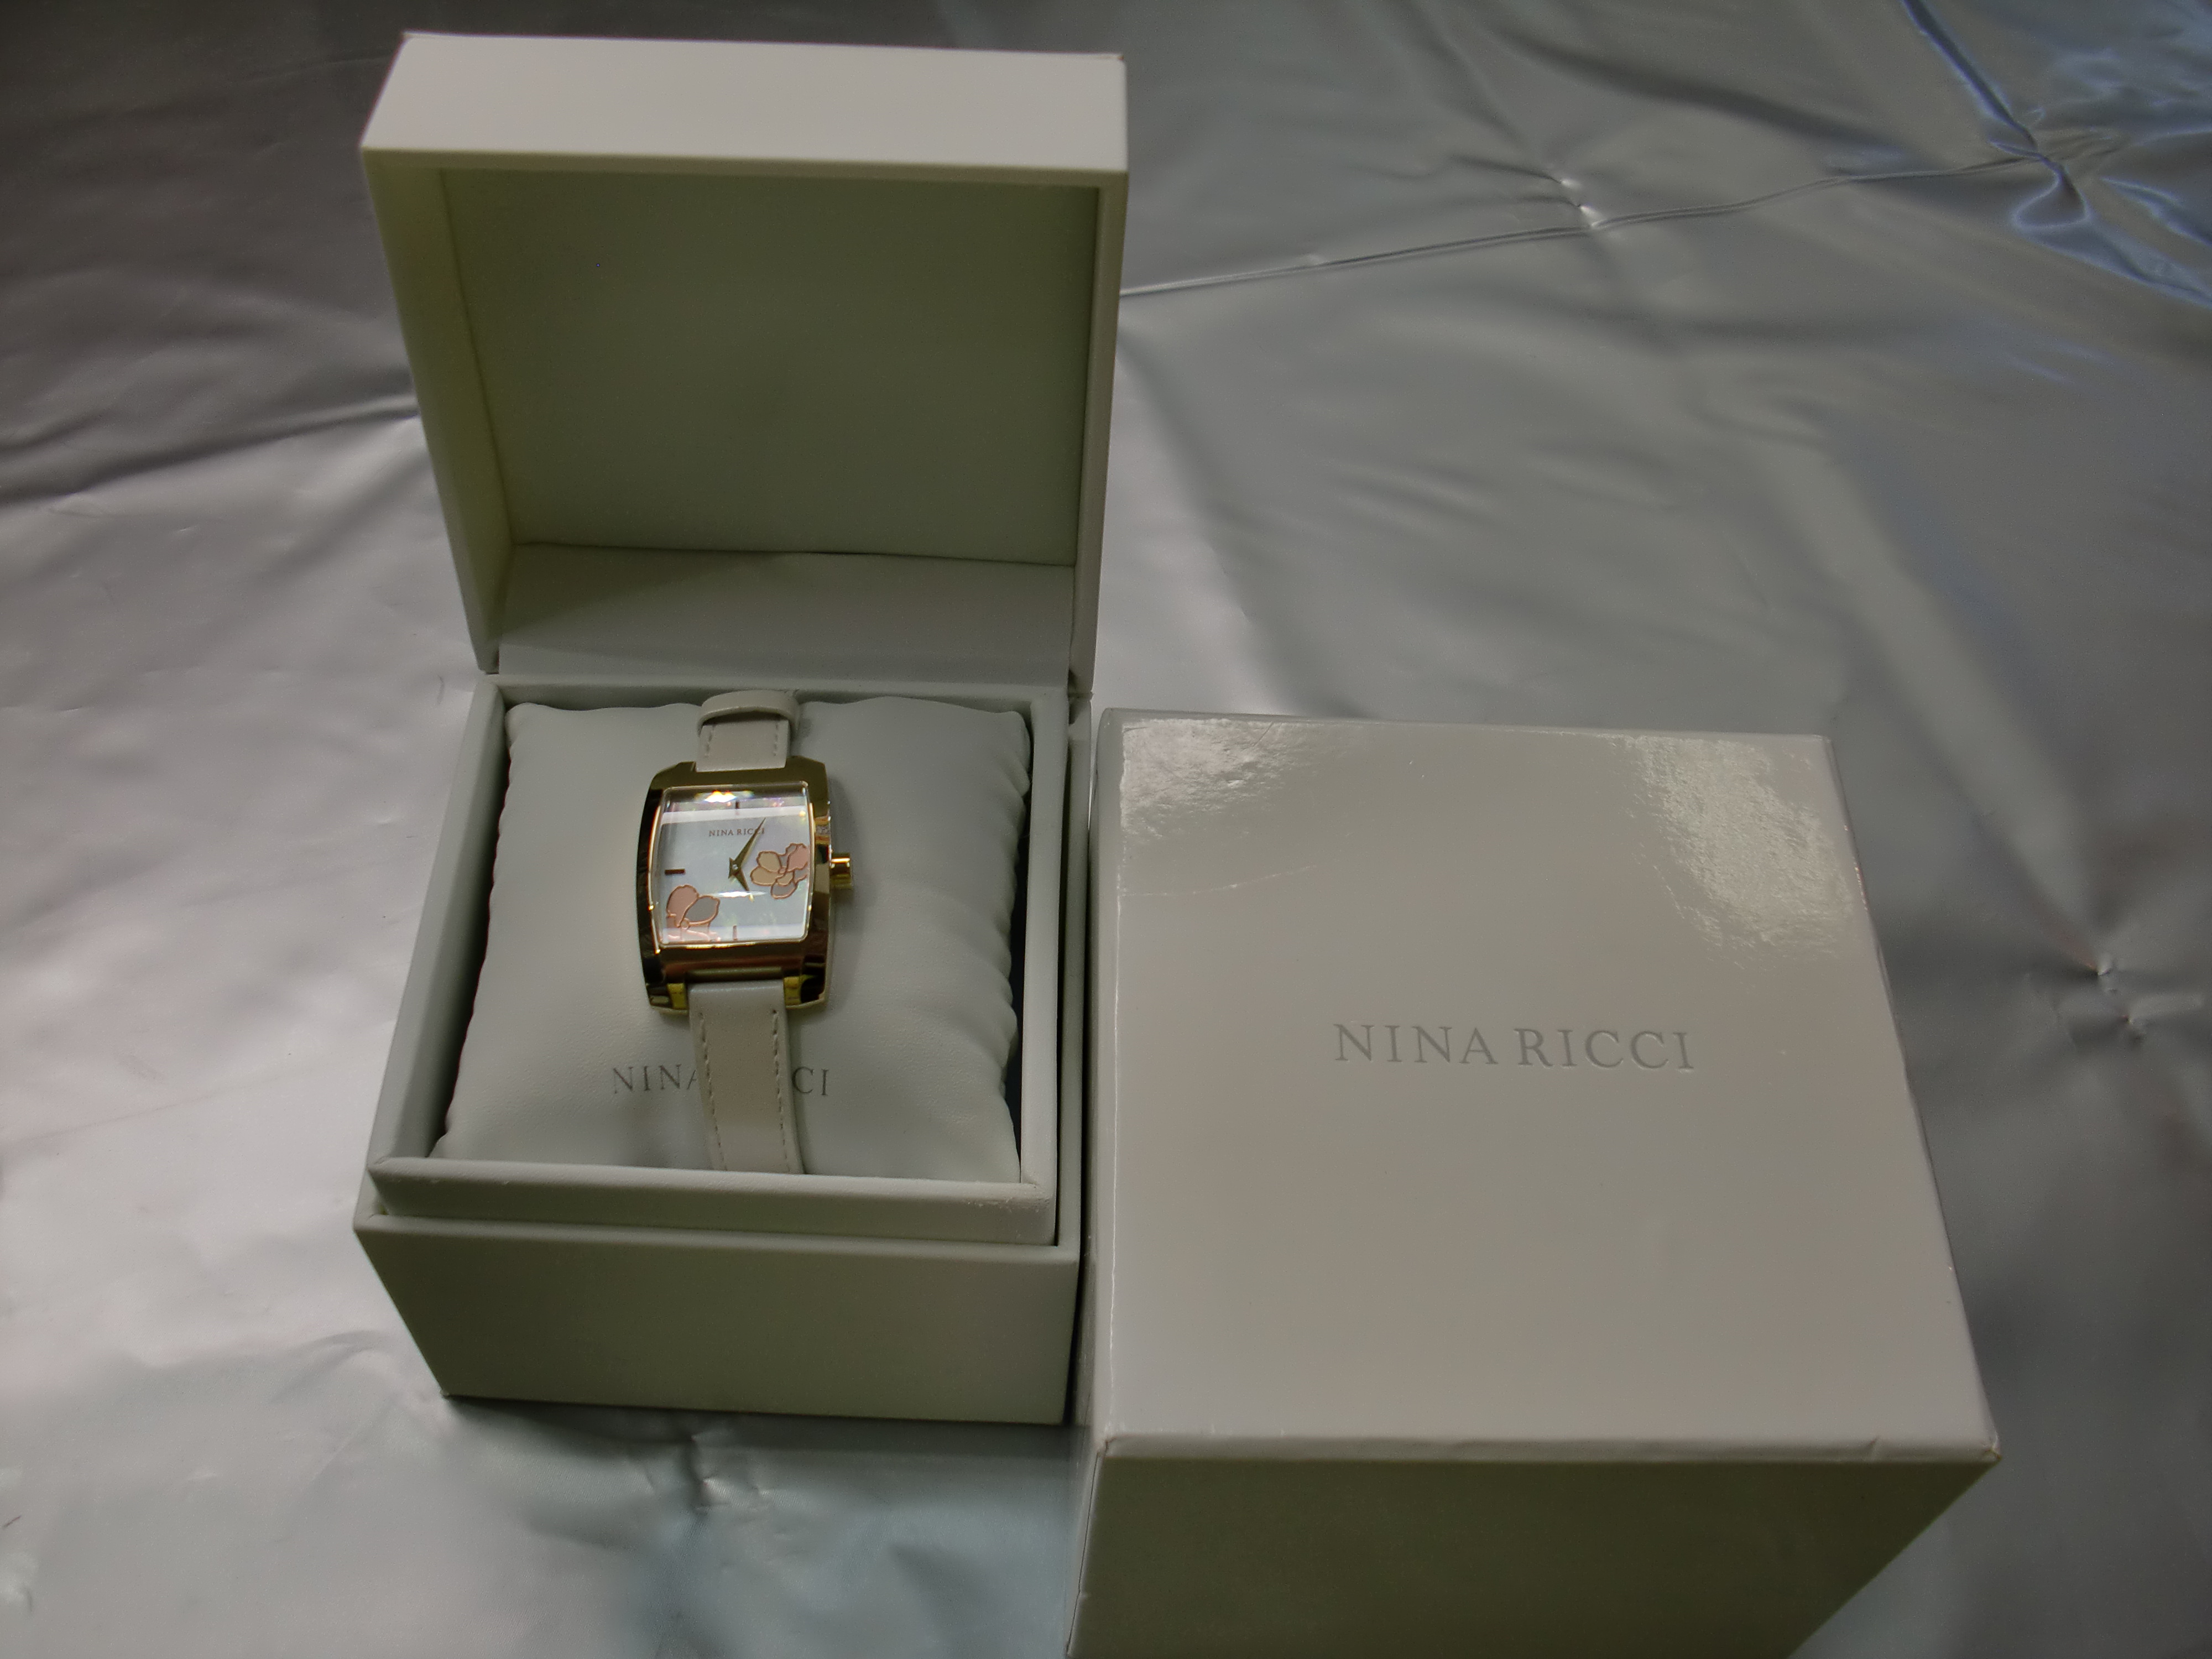 » NINA RICCI ニナリッチ レディース クオーツ腕時計買取致しました|愛品館千葉店 | リサイクルショップ 中古品の買取は愛品倶楽部・愛品館